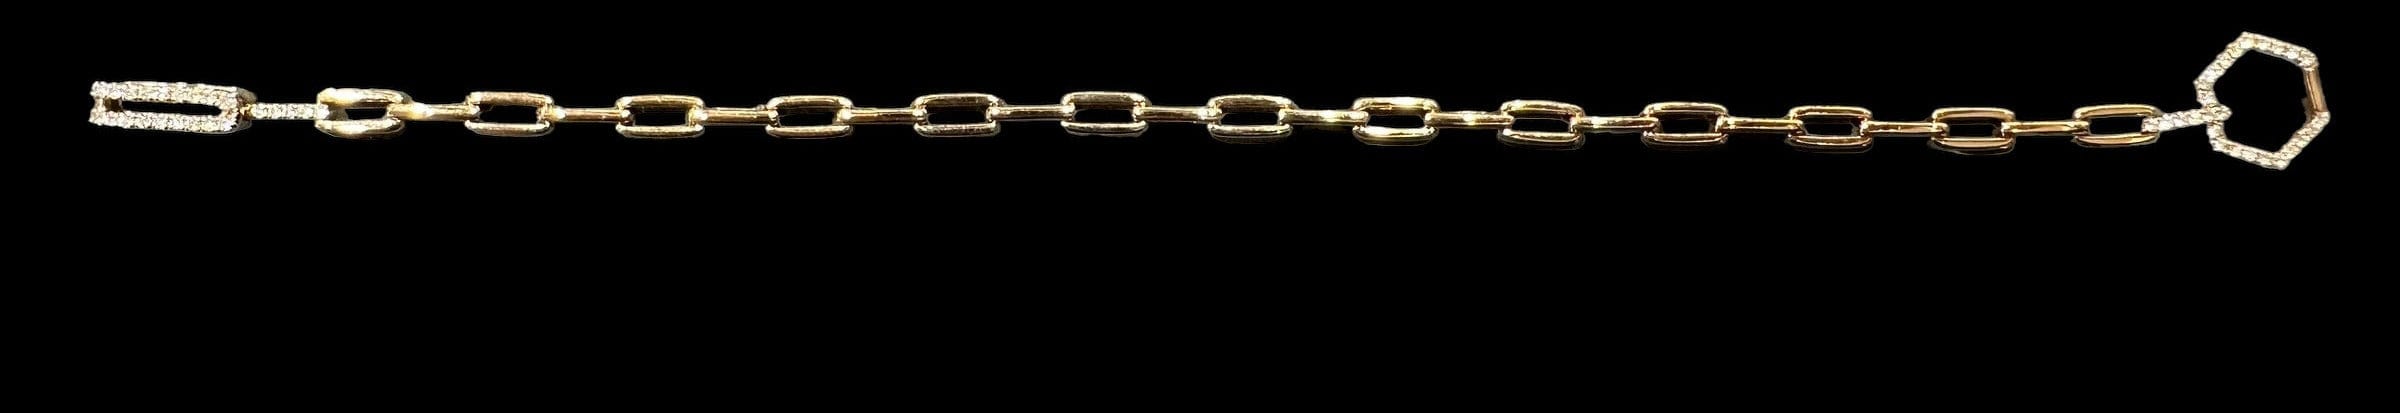 GX Rose Gold open link bracelet with diamonds